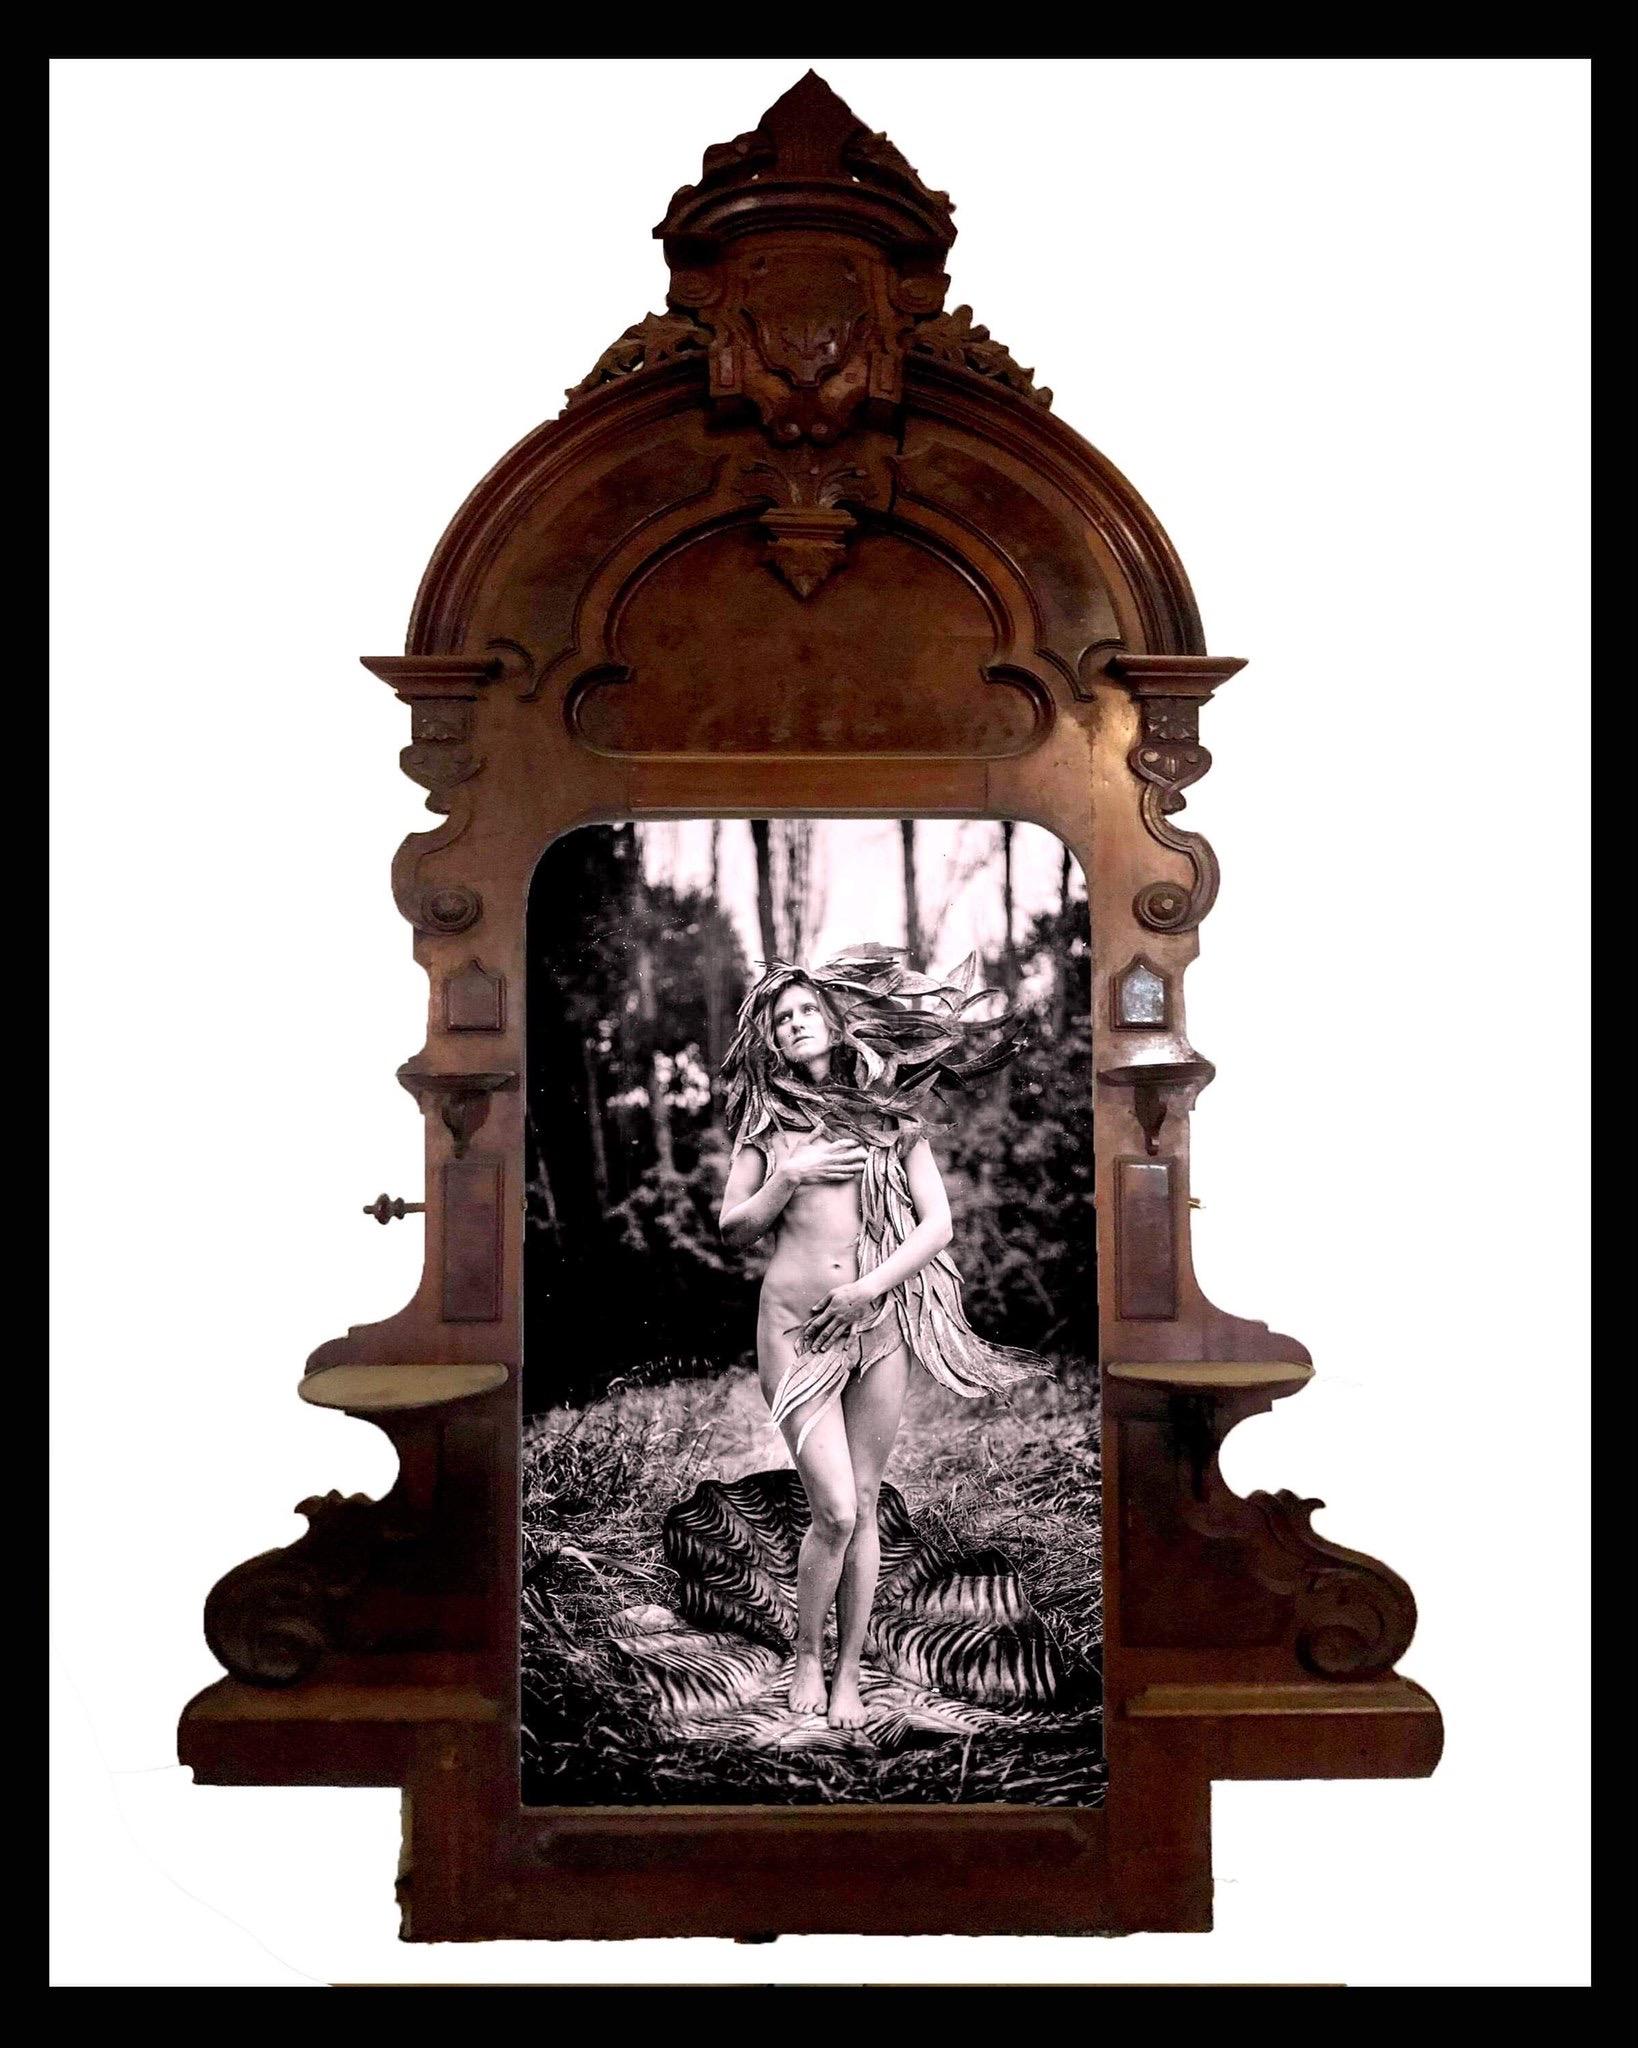 Michael Garlington and Natalia Bertotti Figurative Photograph - Venus, archival pigment print, antique frame, embellished frame, 84